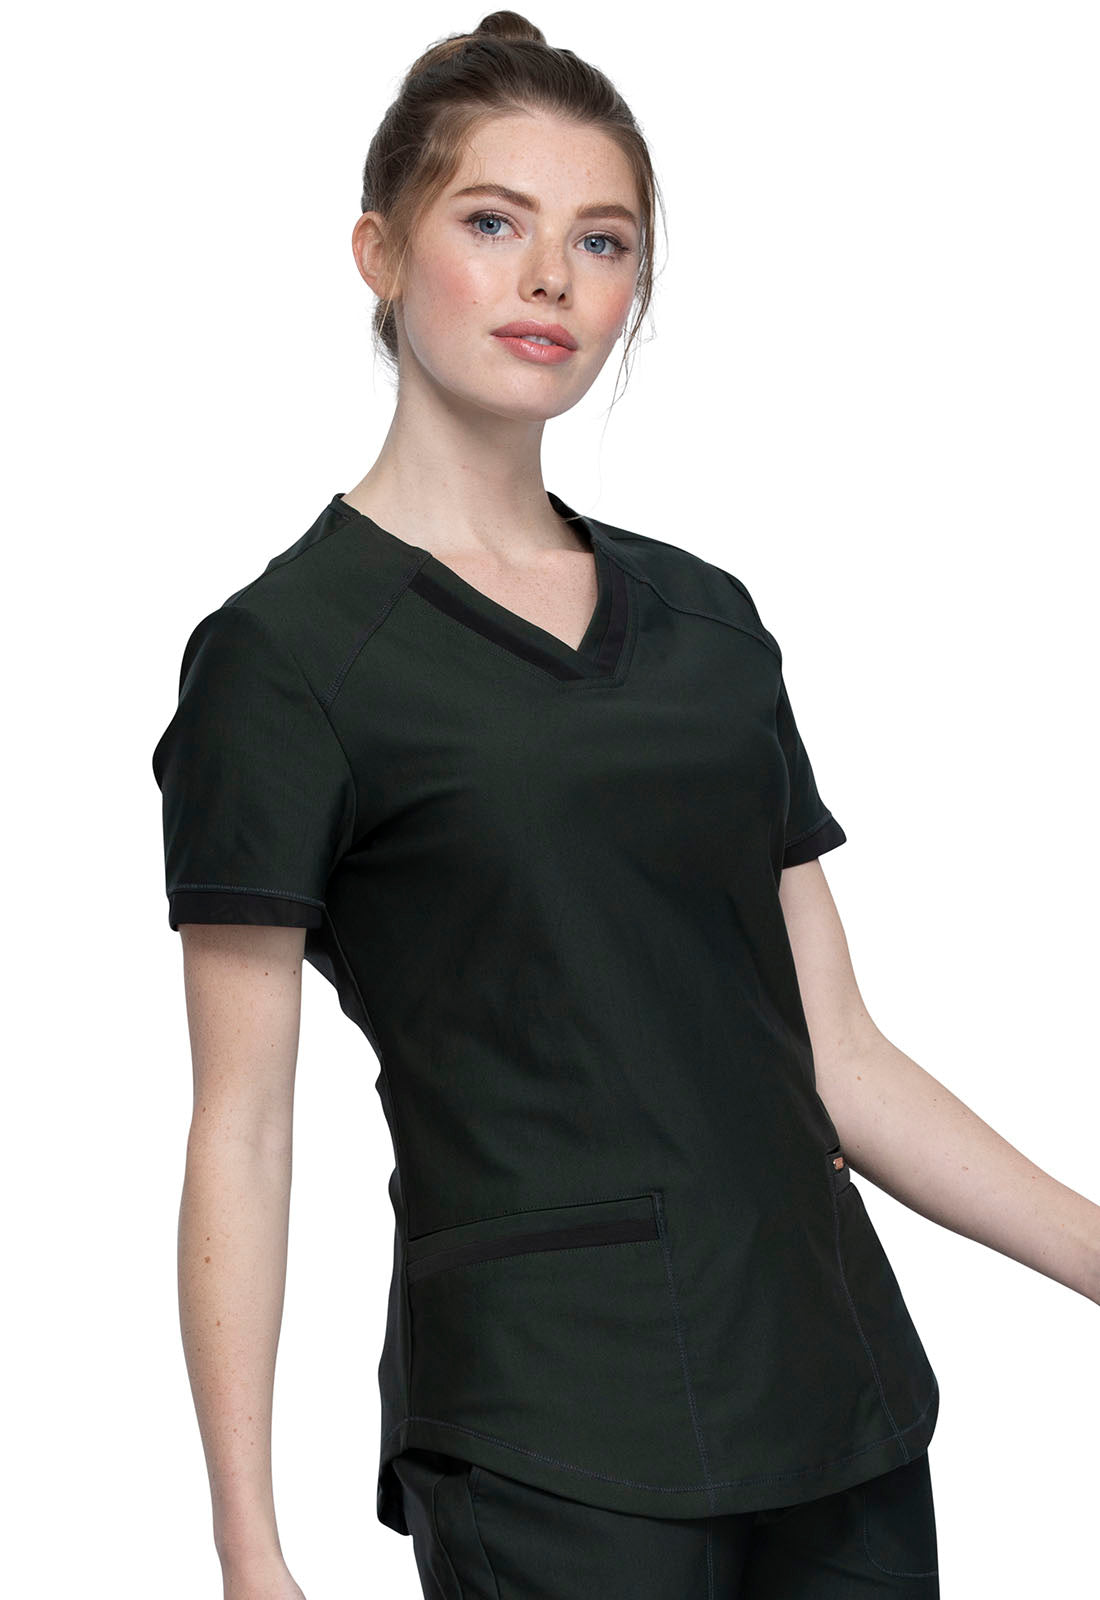 women's medical uniform tops, fashionable nurses uniforms, Women's Cherokee Form V-Neck Top